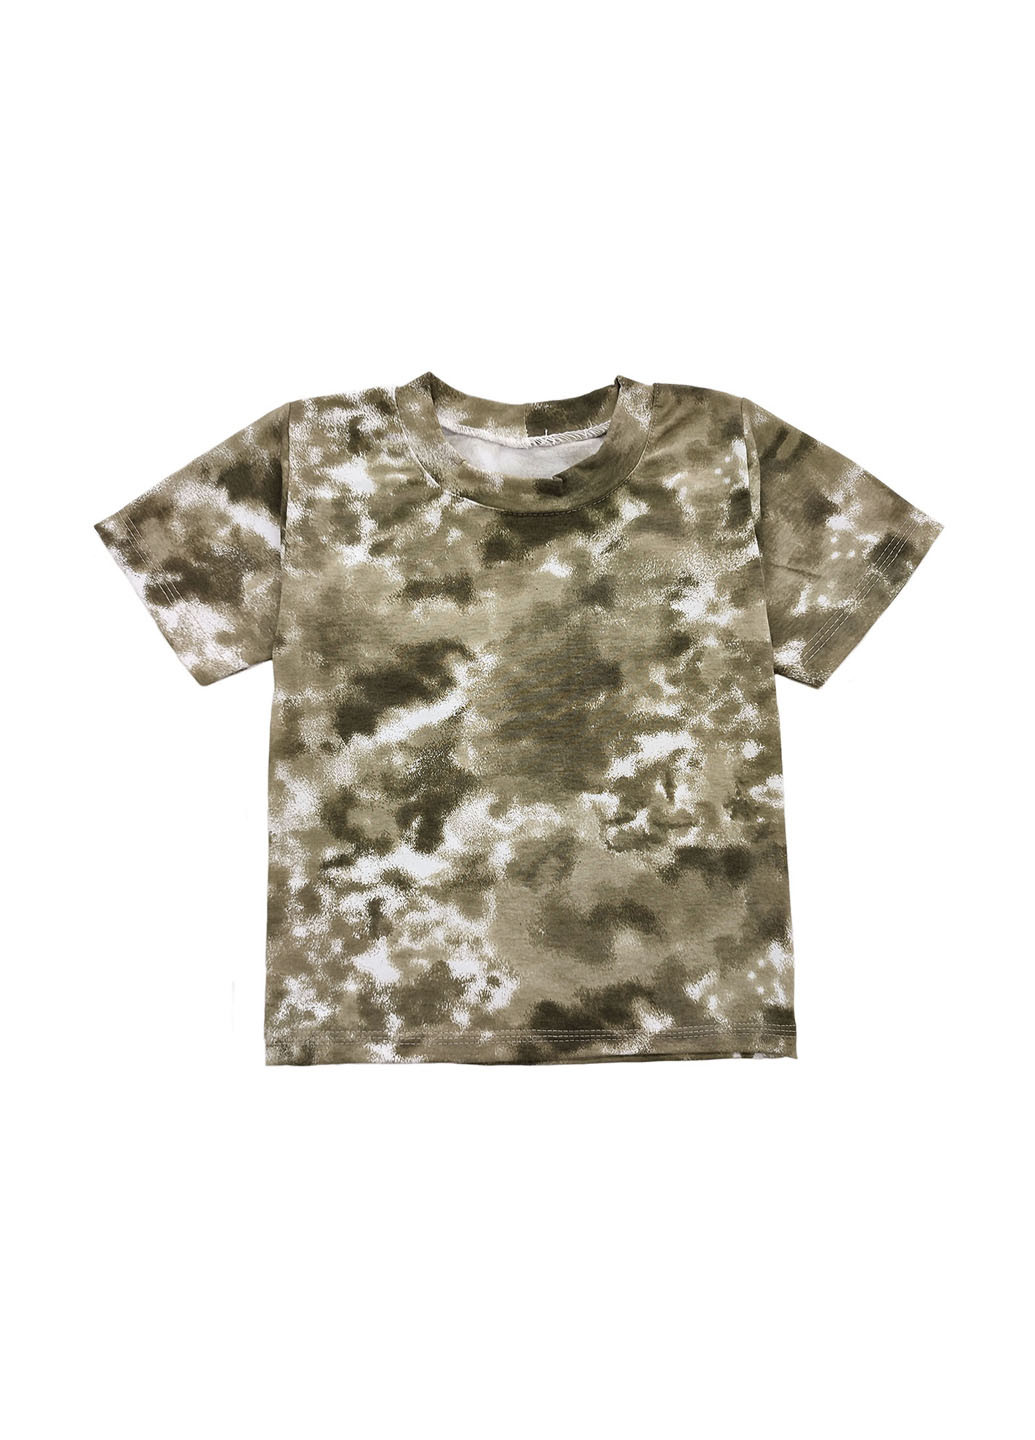 Хаки (оливковая) летняя футболка Ивтекс